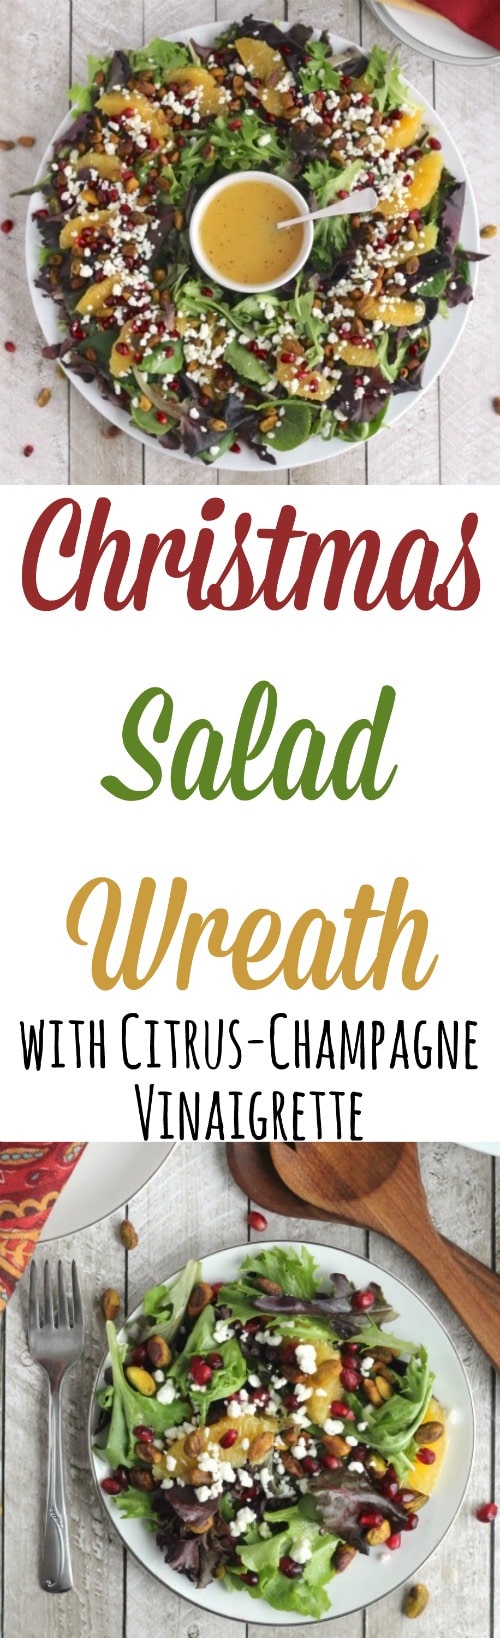 Christmas Salad with Citrus-Champagne Vinaigrette Recipe {www.TwoHealthyKitchens.com}